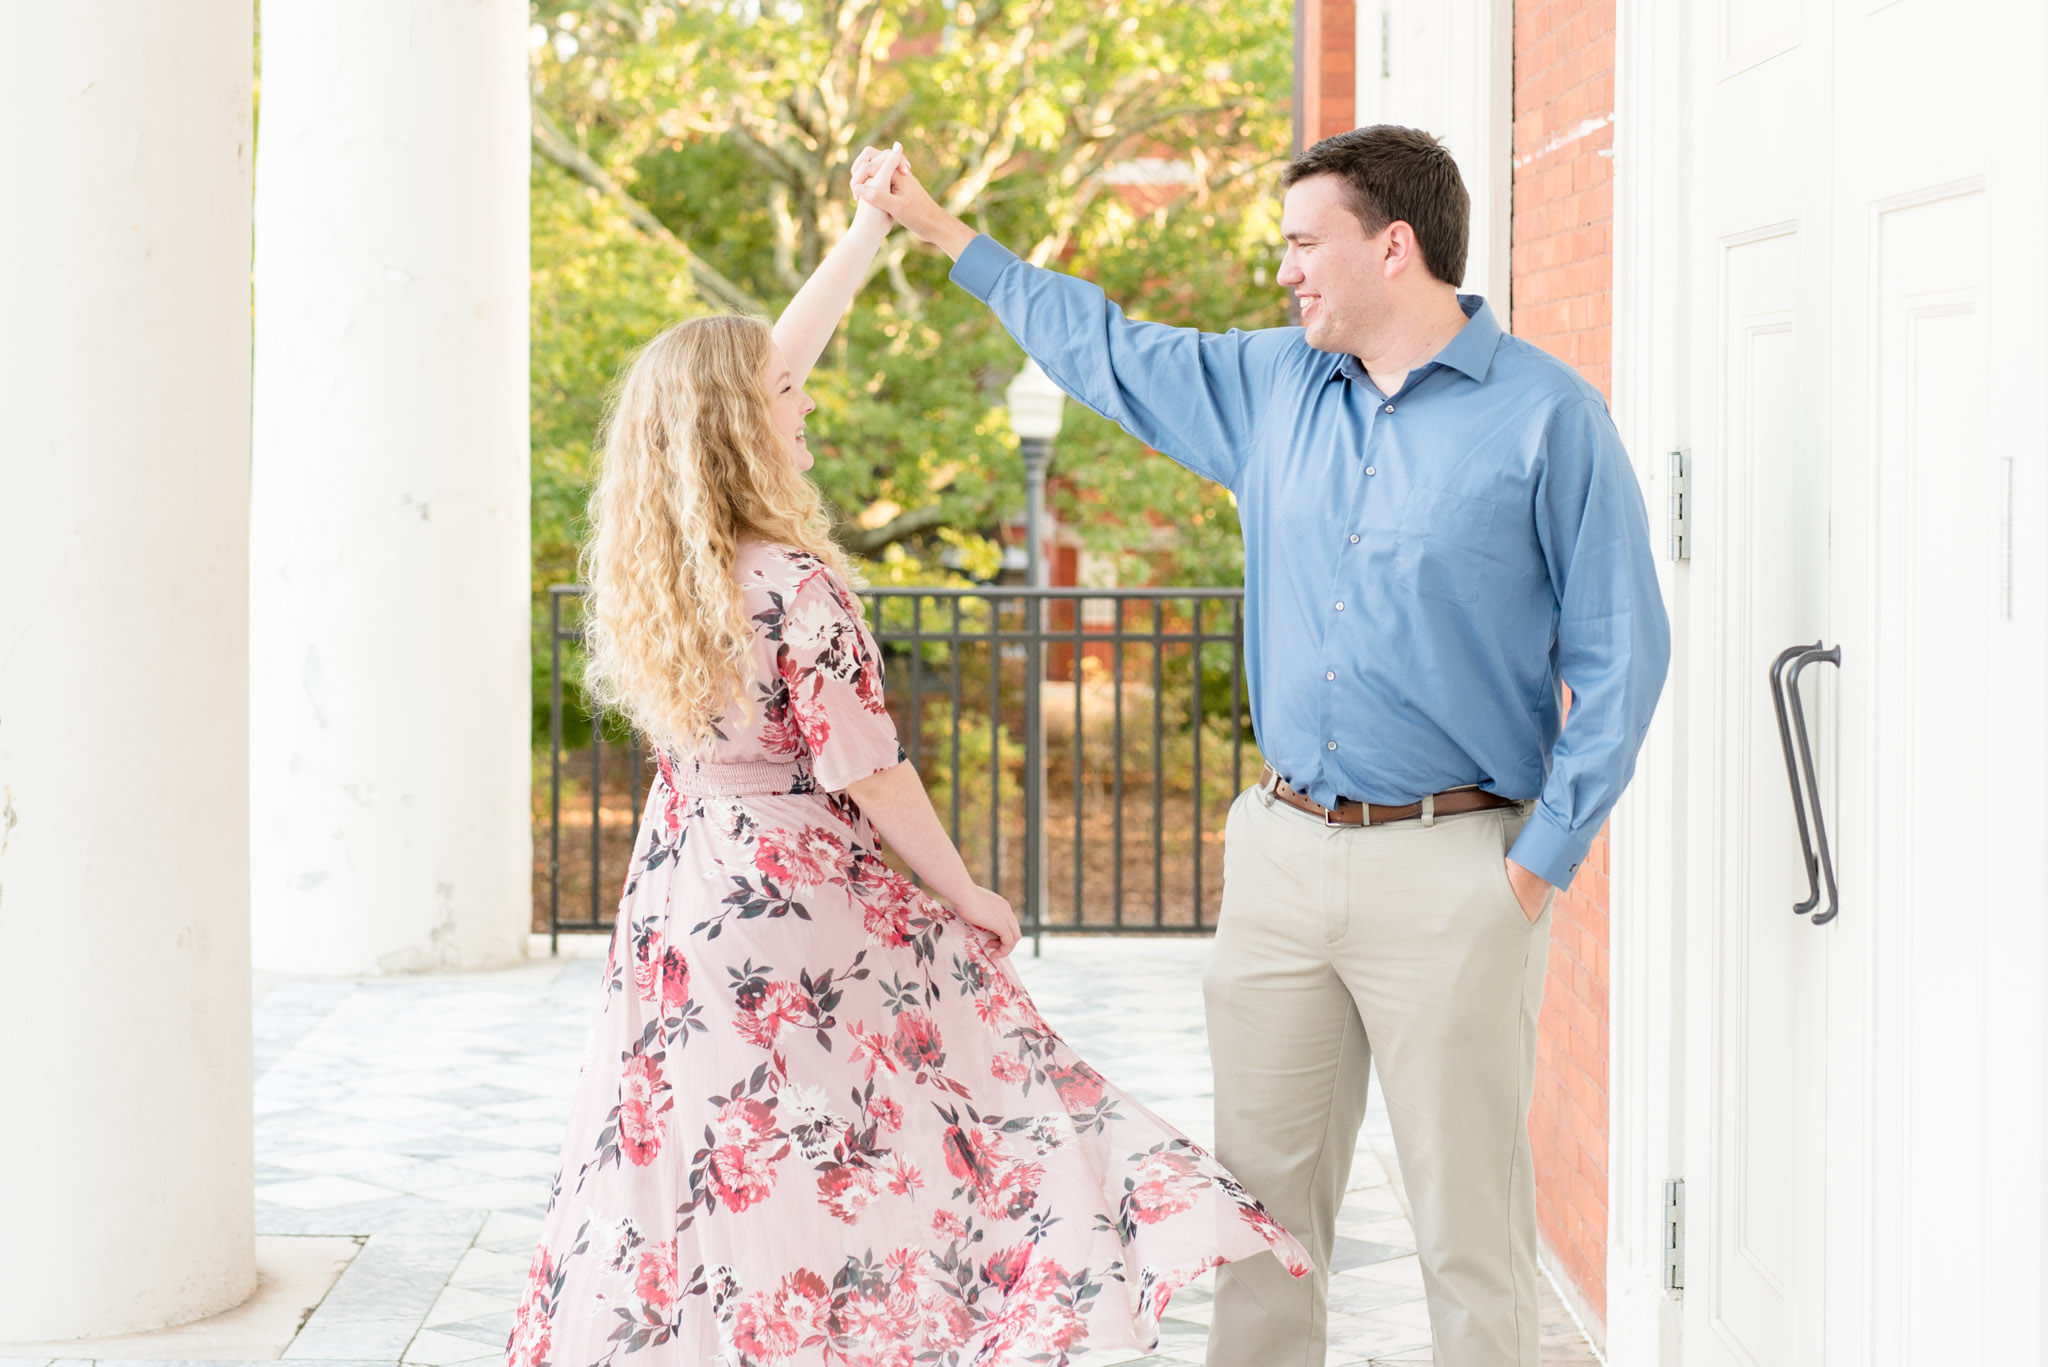 Man twirls woman at Auburn University.